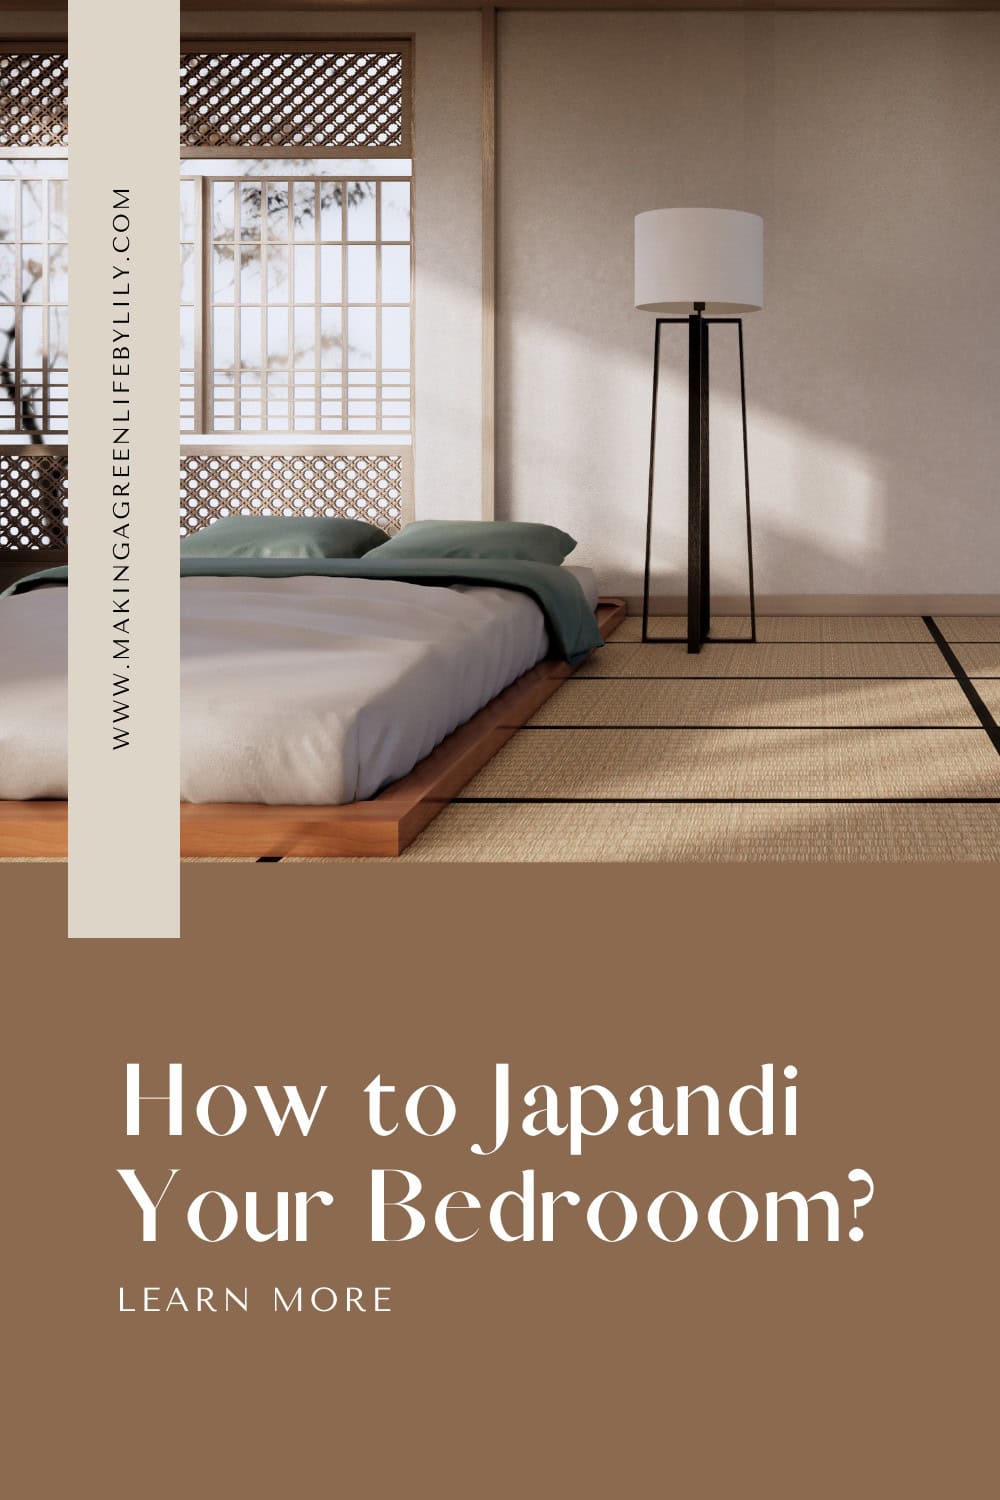 How to japandi Bedroom